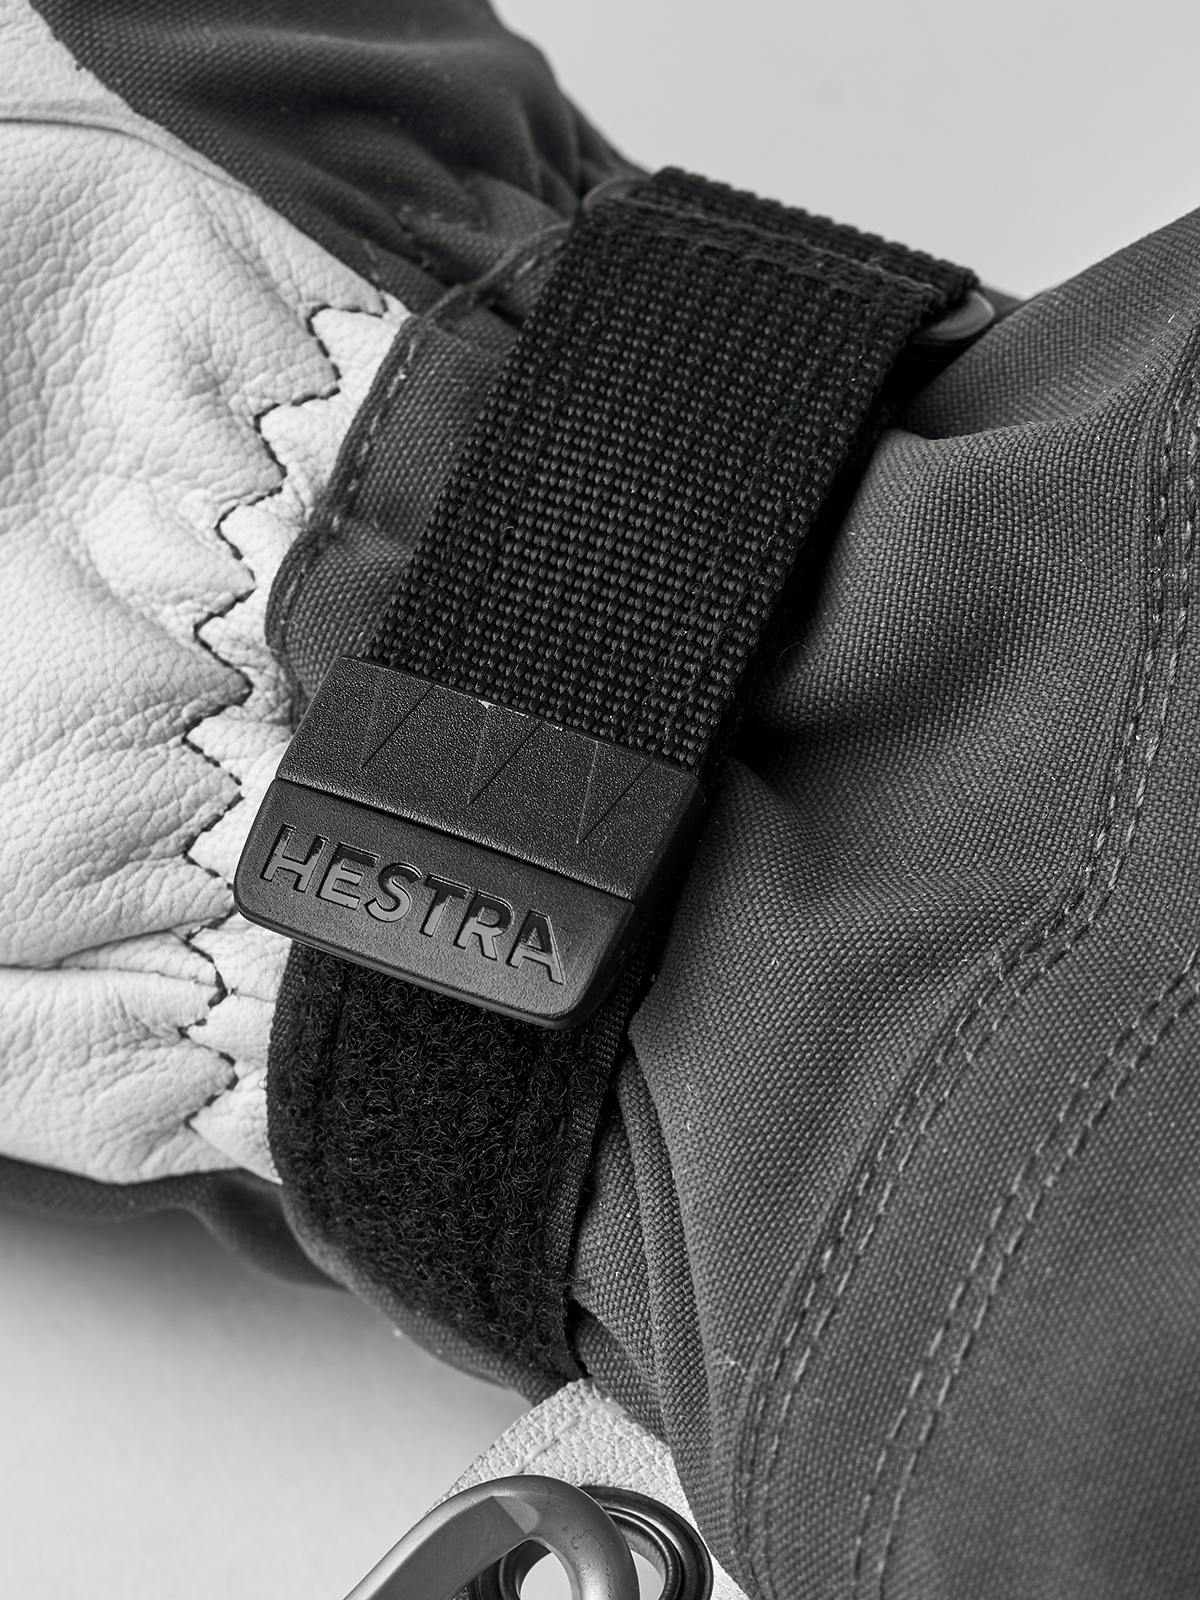 Hestra Army Leather Heli Ski 3-Finger